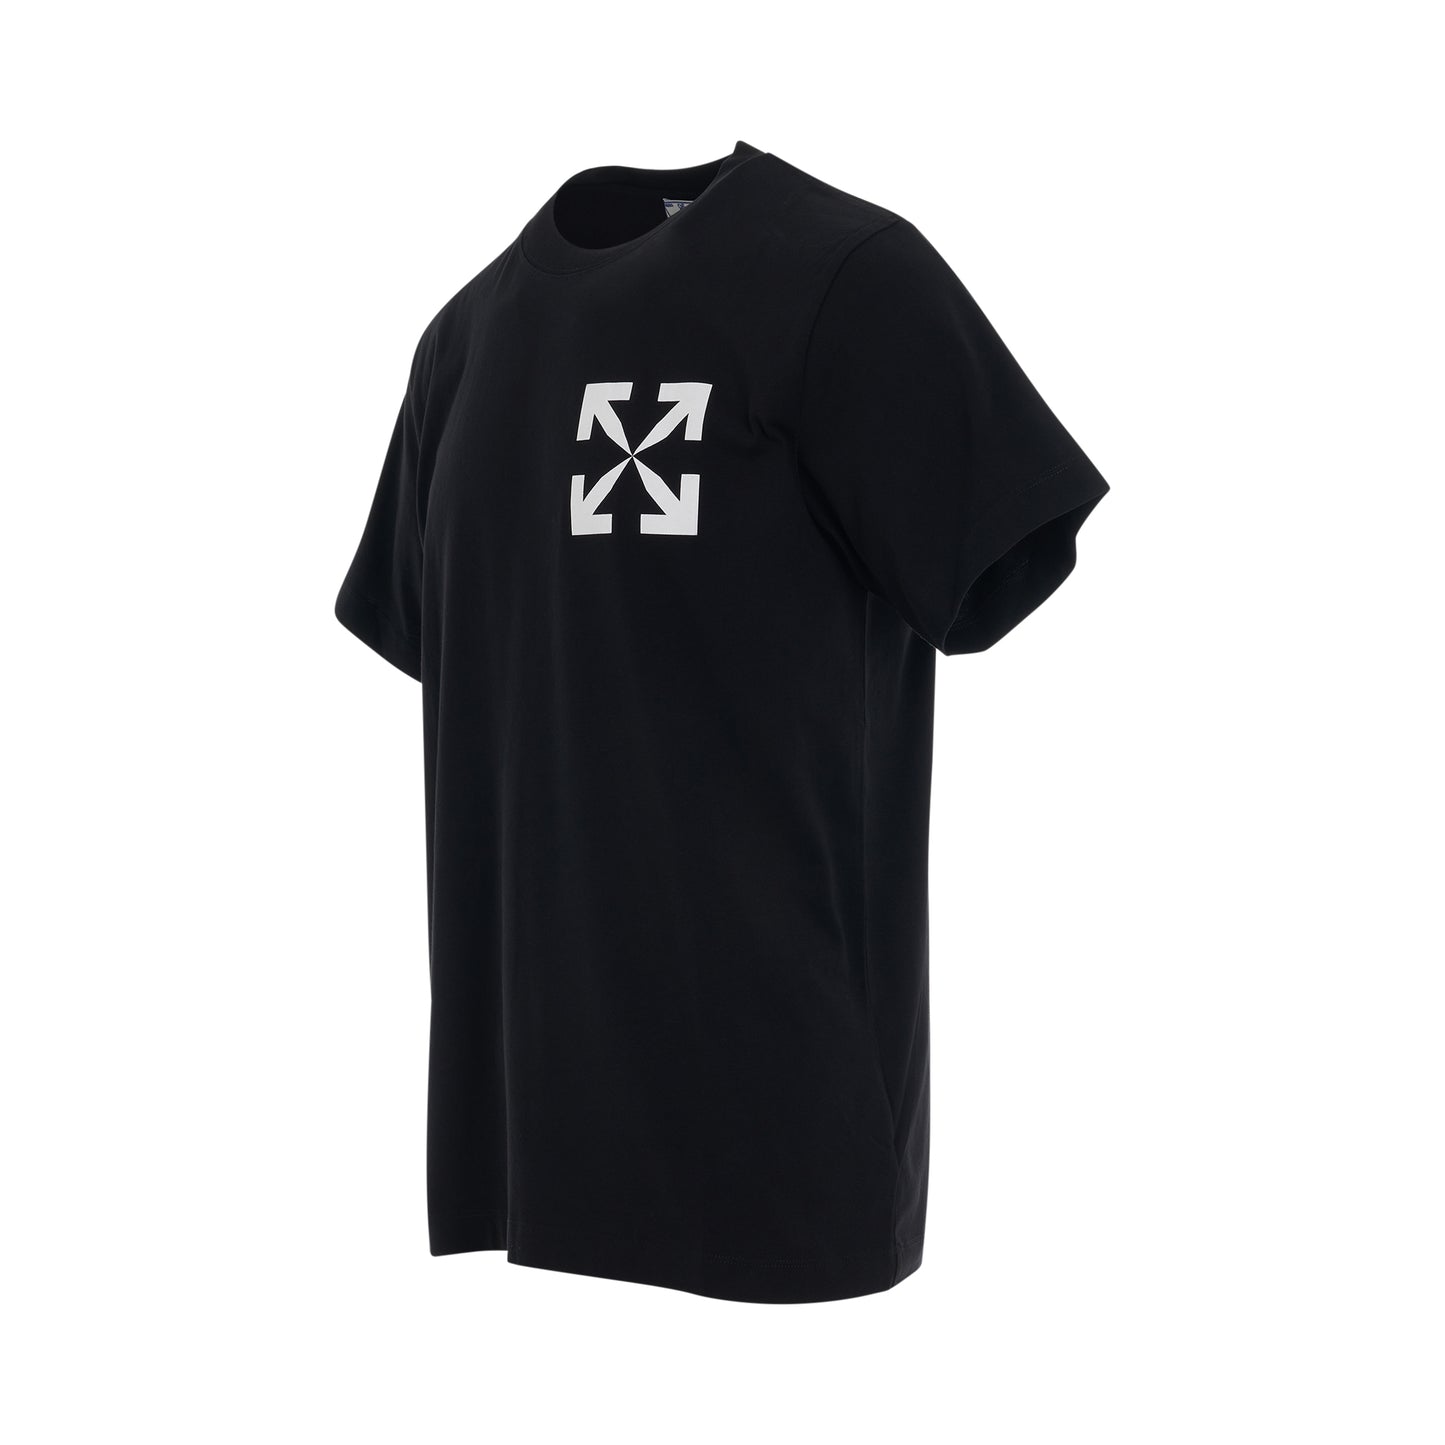 Single Arrow Slim Fit T-Shirt in Black/White